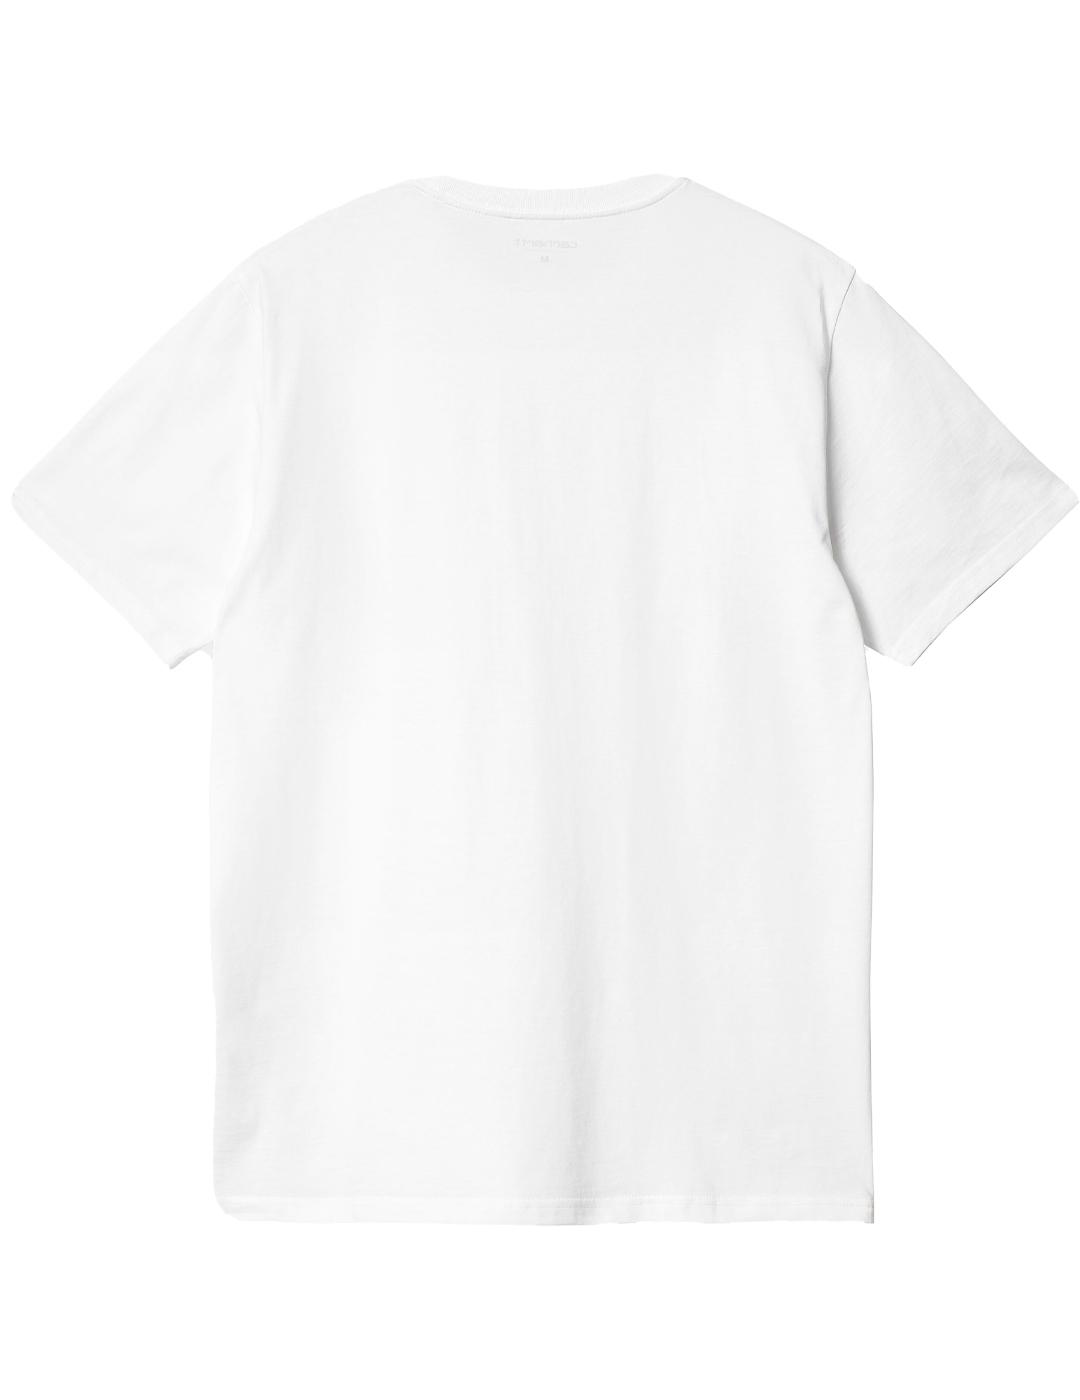 T-Shirt Carhartt Wip Pocket Blanc